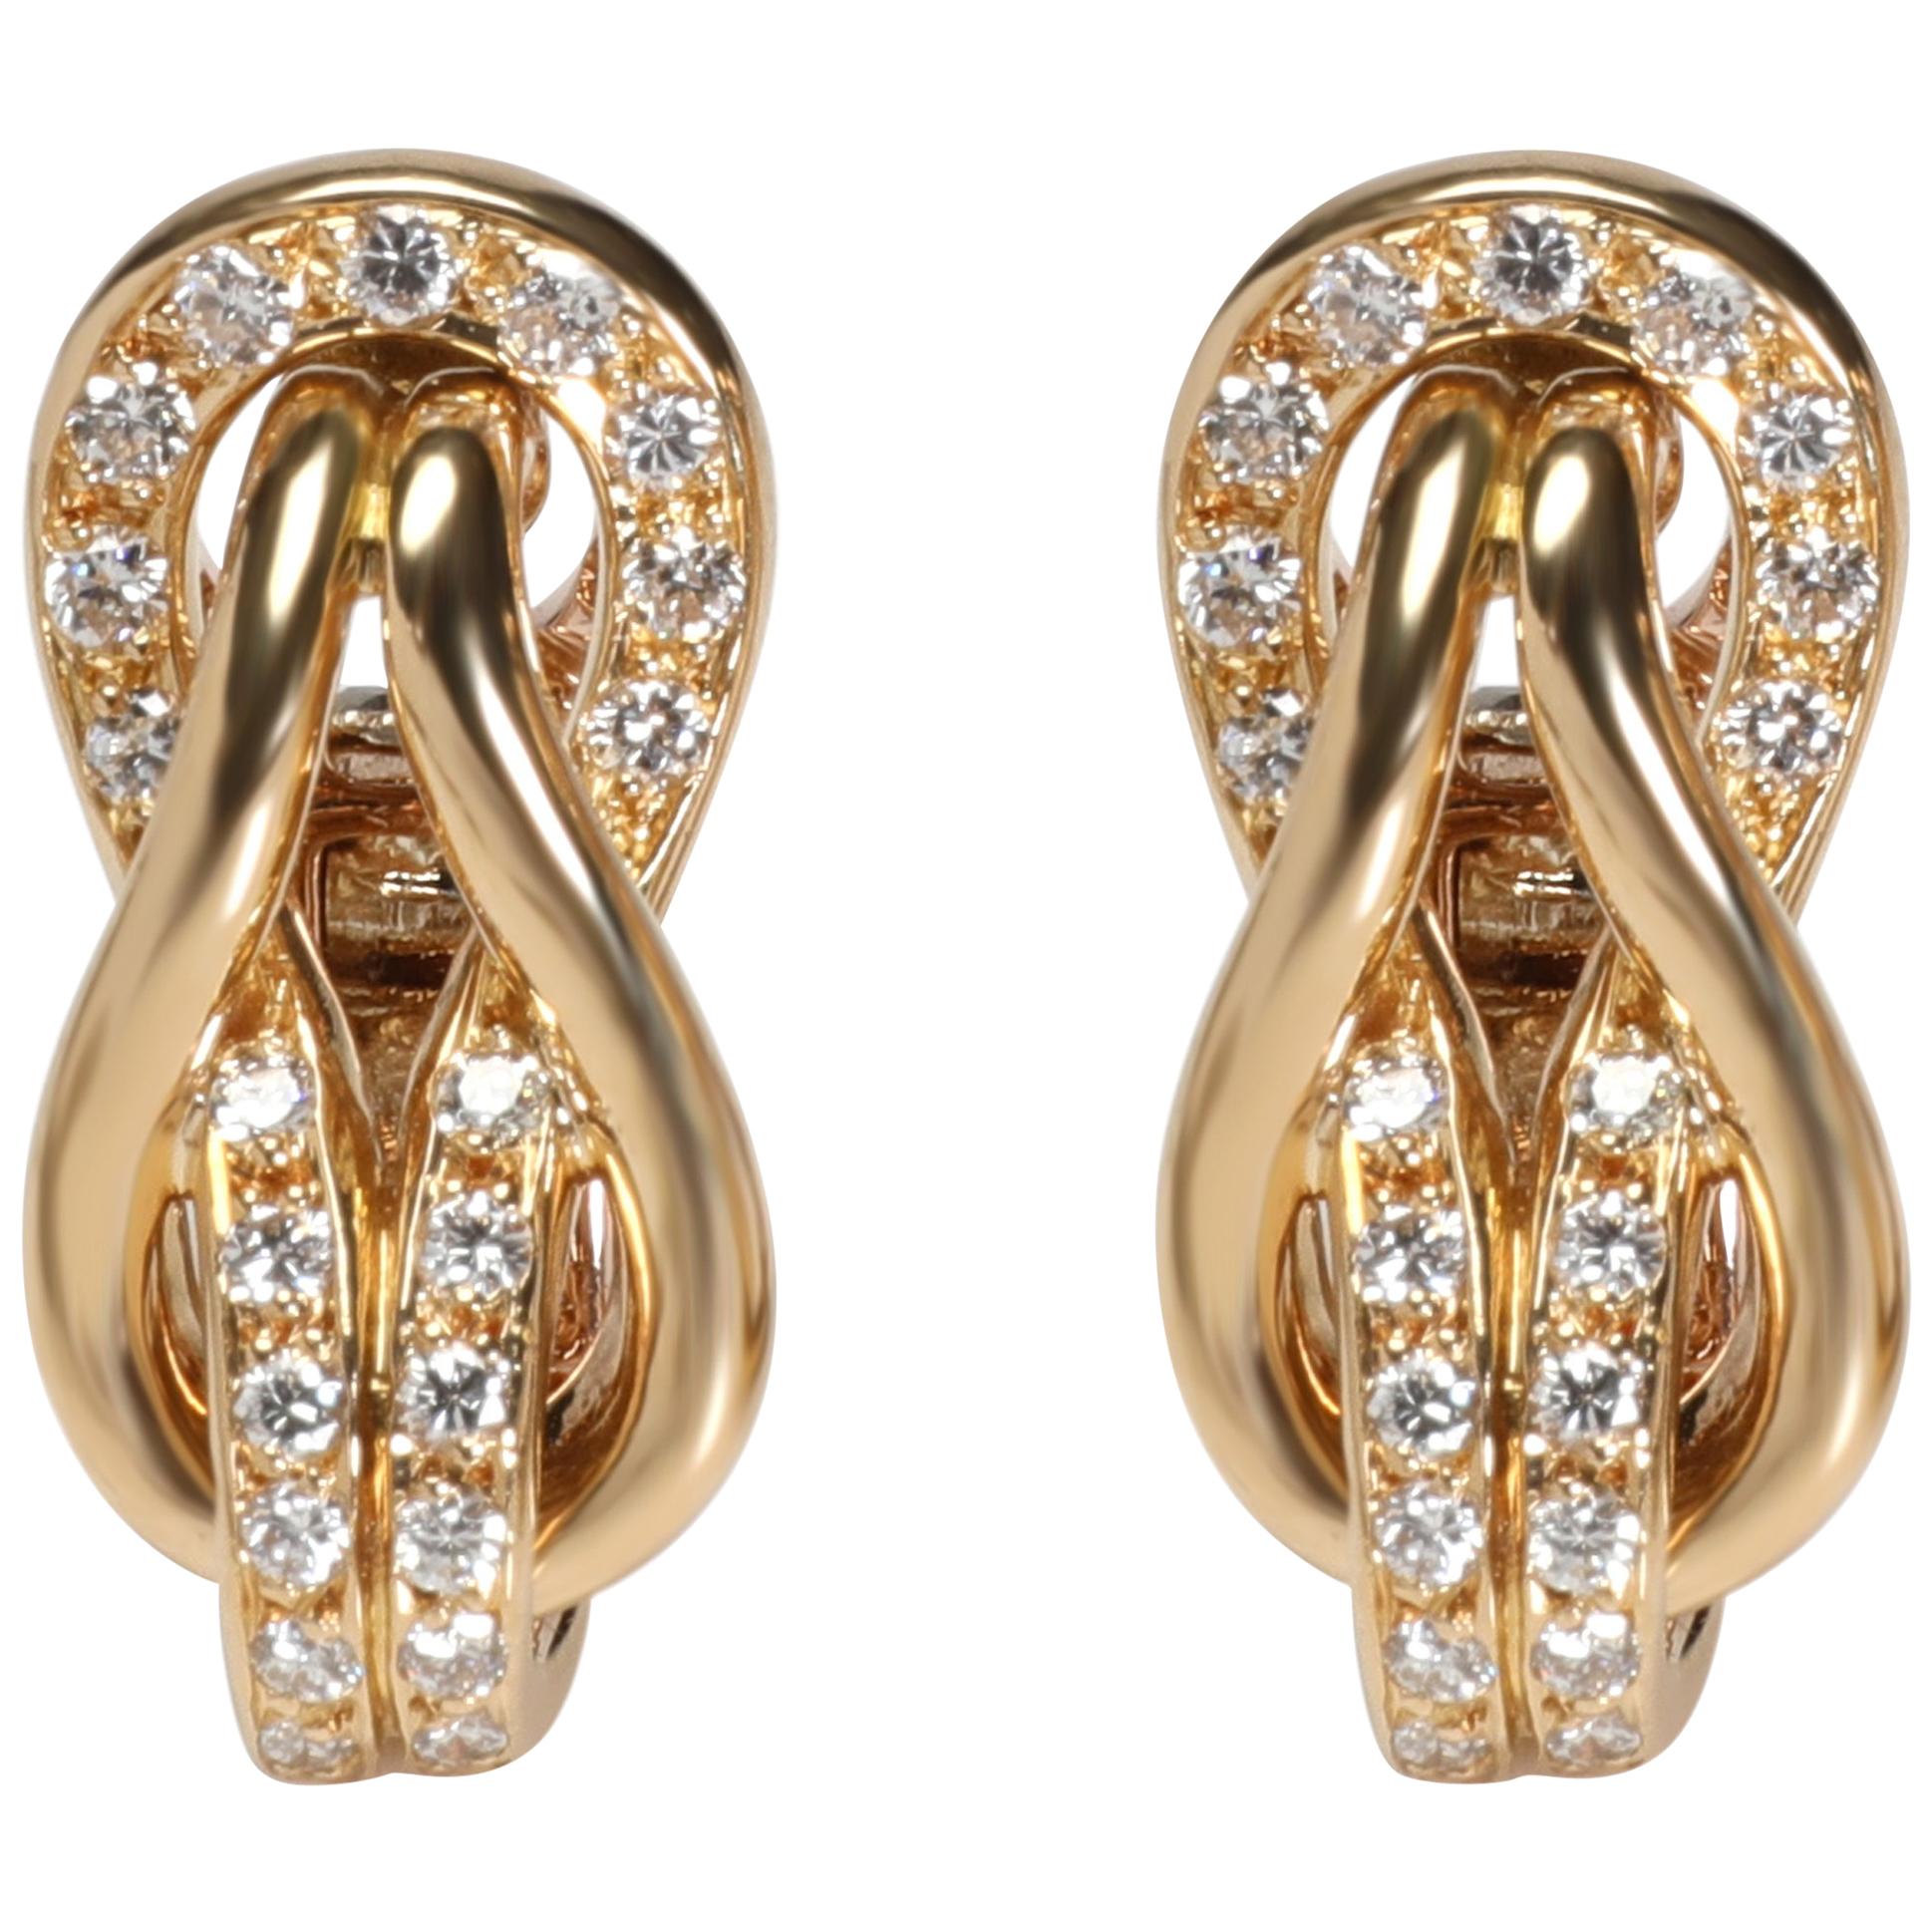 Cartier Love Knot Diamond Earrings in 18 Karat Yellow Gold 0.42 Carat